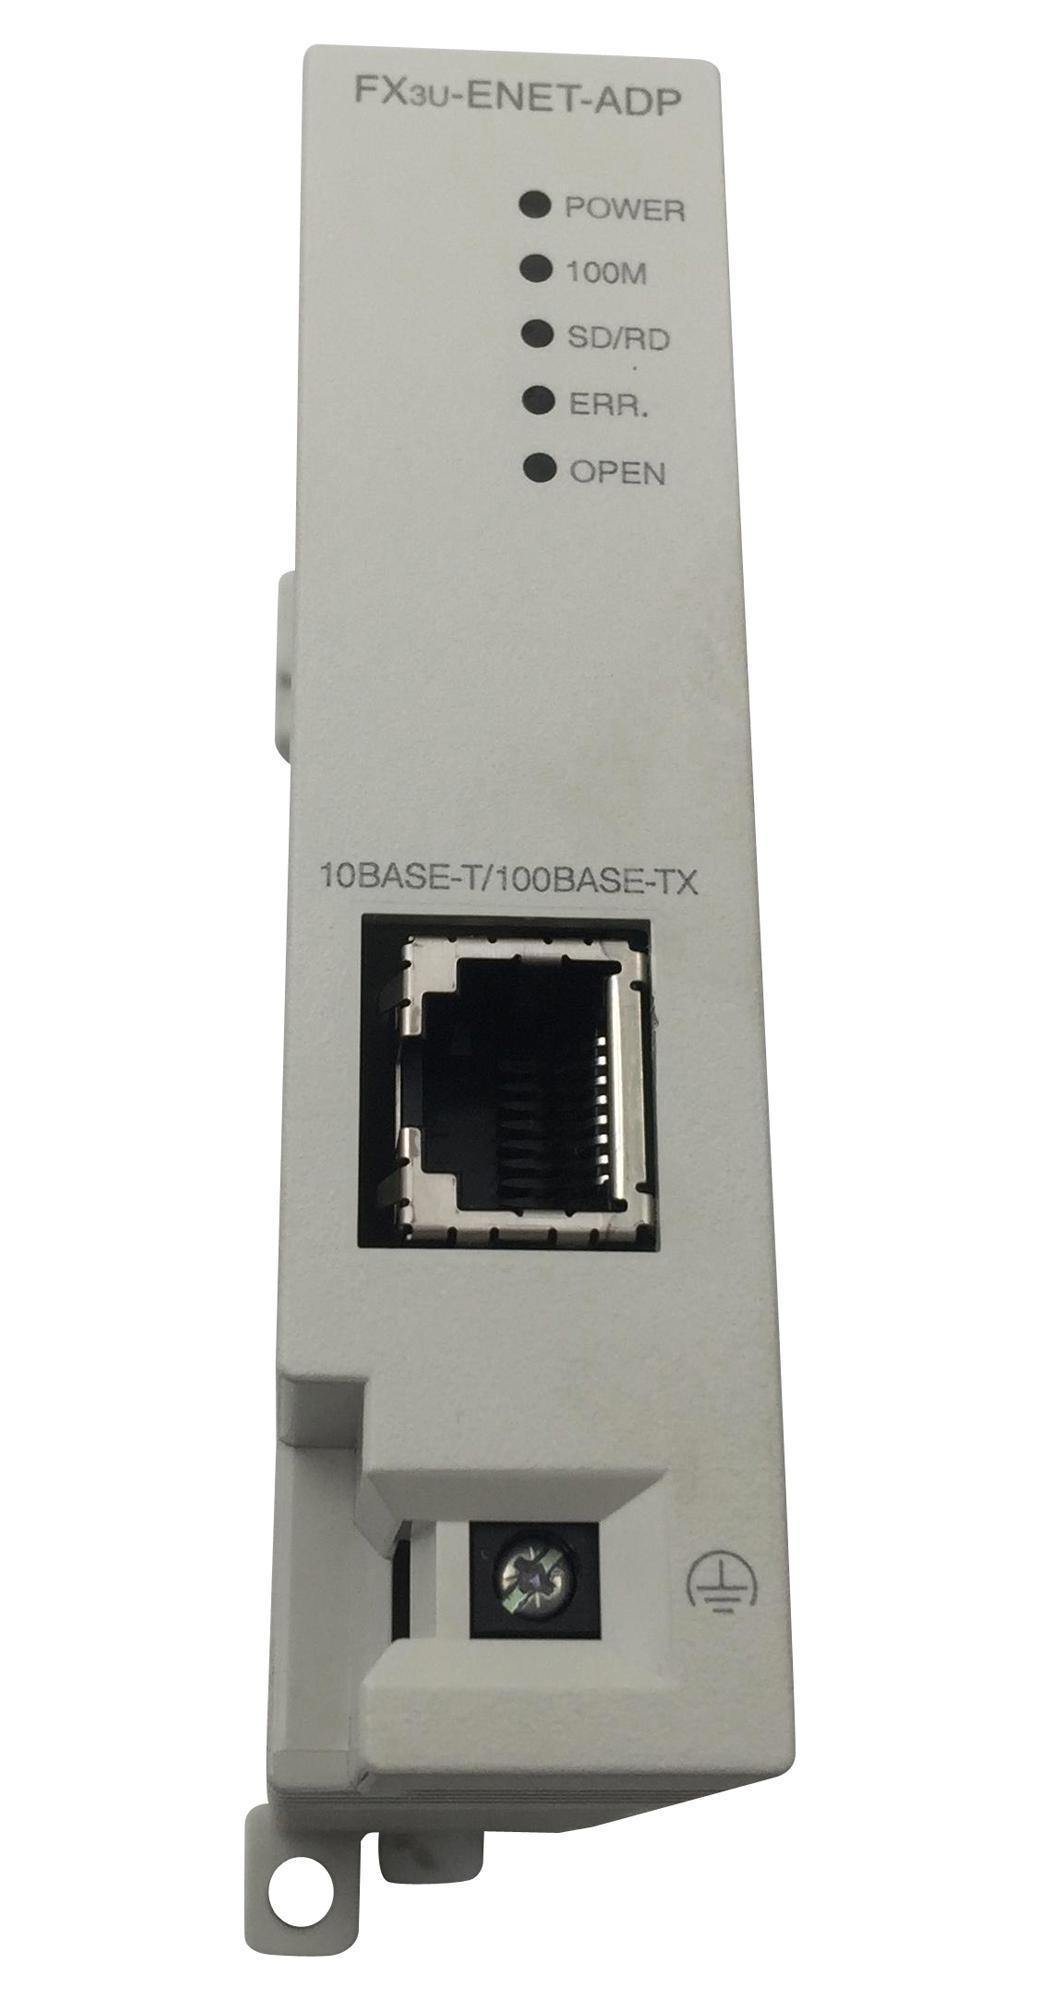 Mitsubishi Fx3U-Enet-Adp Ethernet Comm Module, Tcp/ip, Rj45